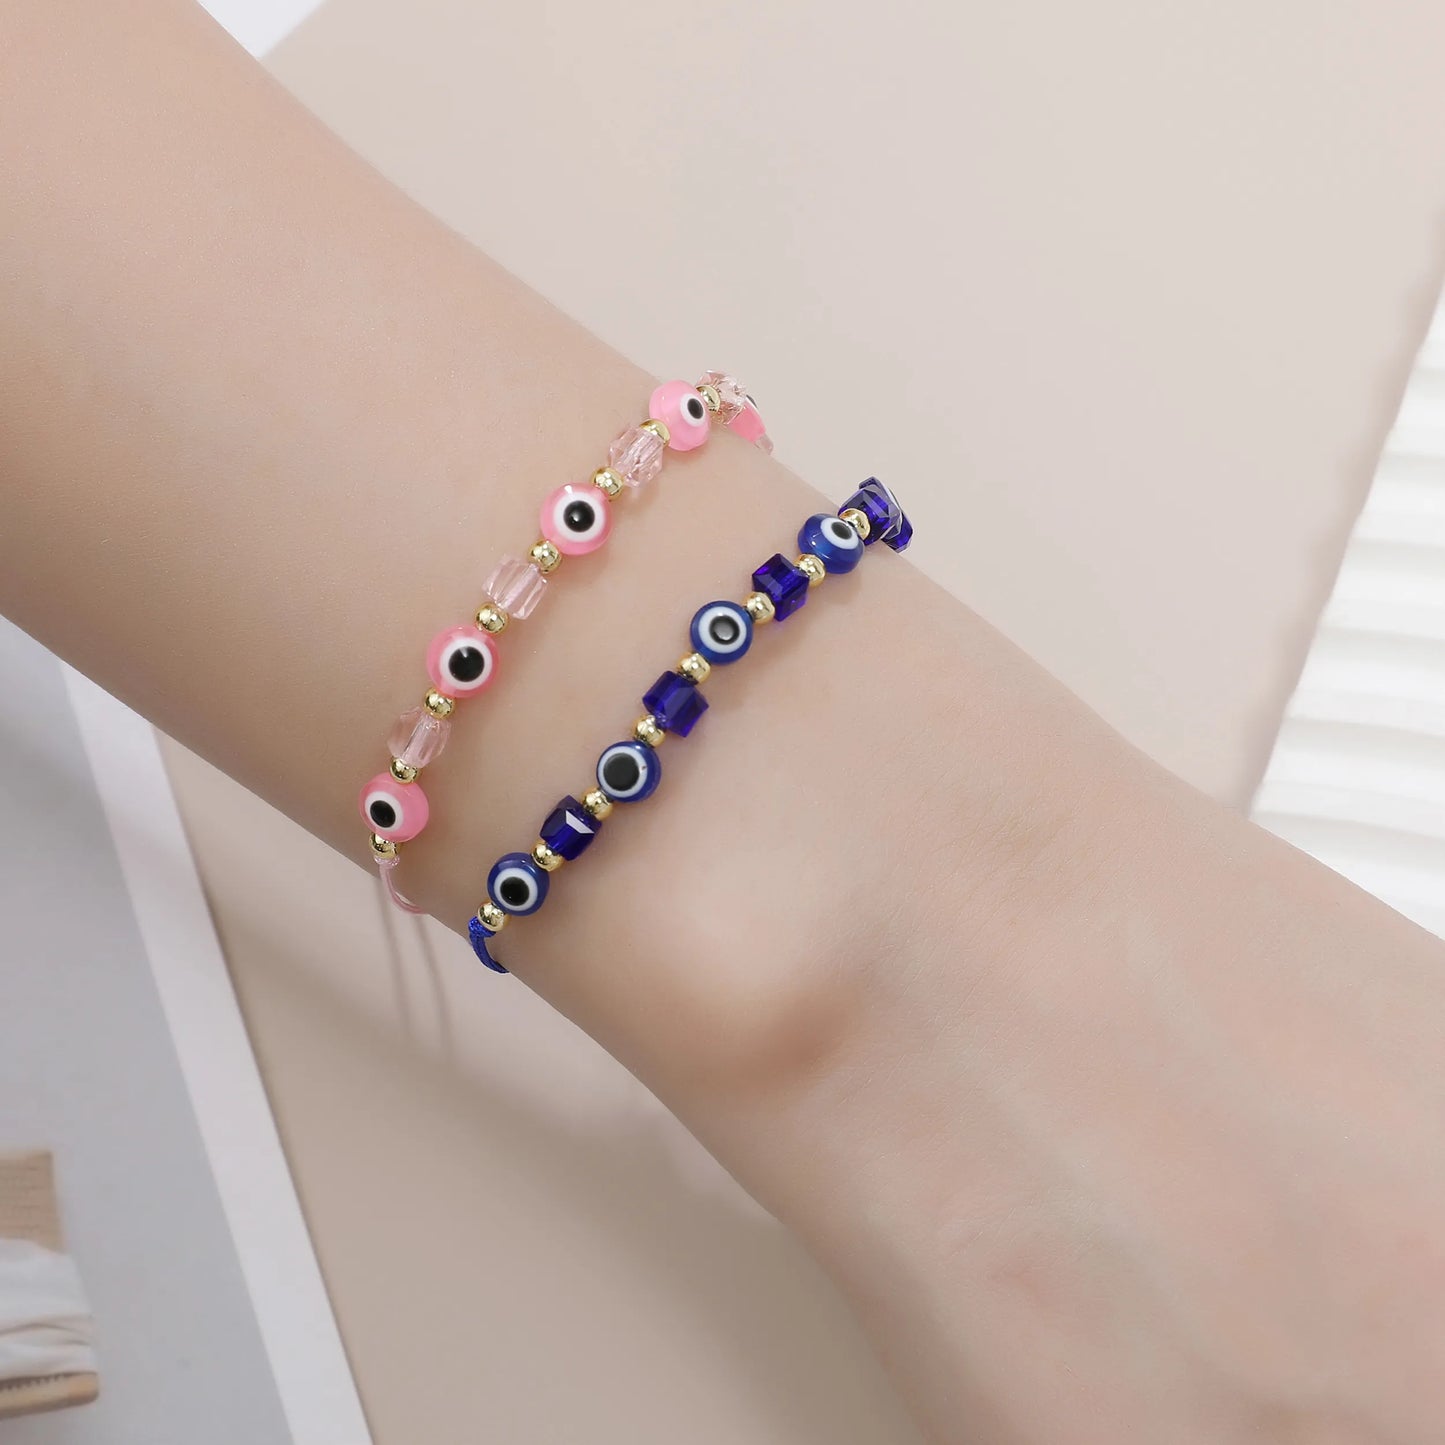 12pcs Colorful Evil Eye Beads Bracelet Handmade Prayer Bangles Adjustable Anklets Wrist Jewelry Gift for Friend Wholesale